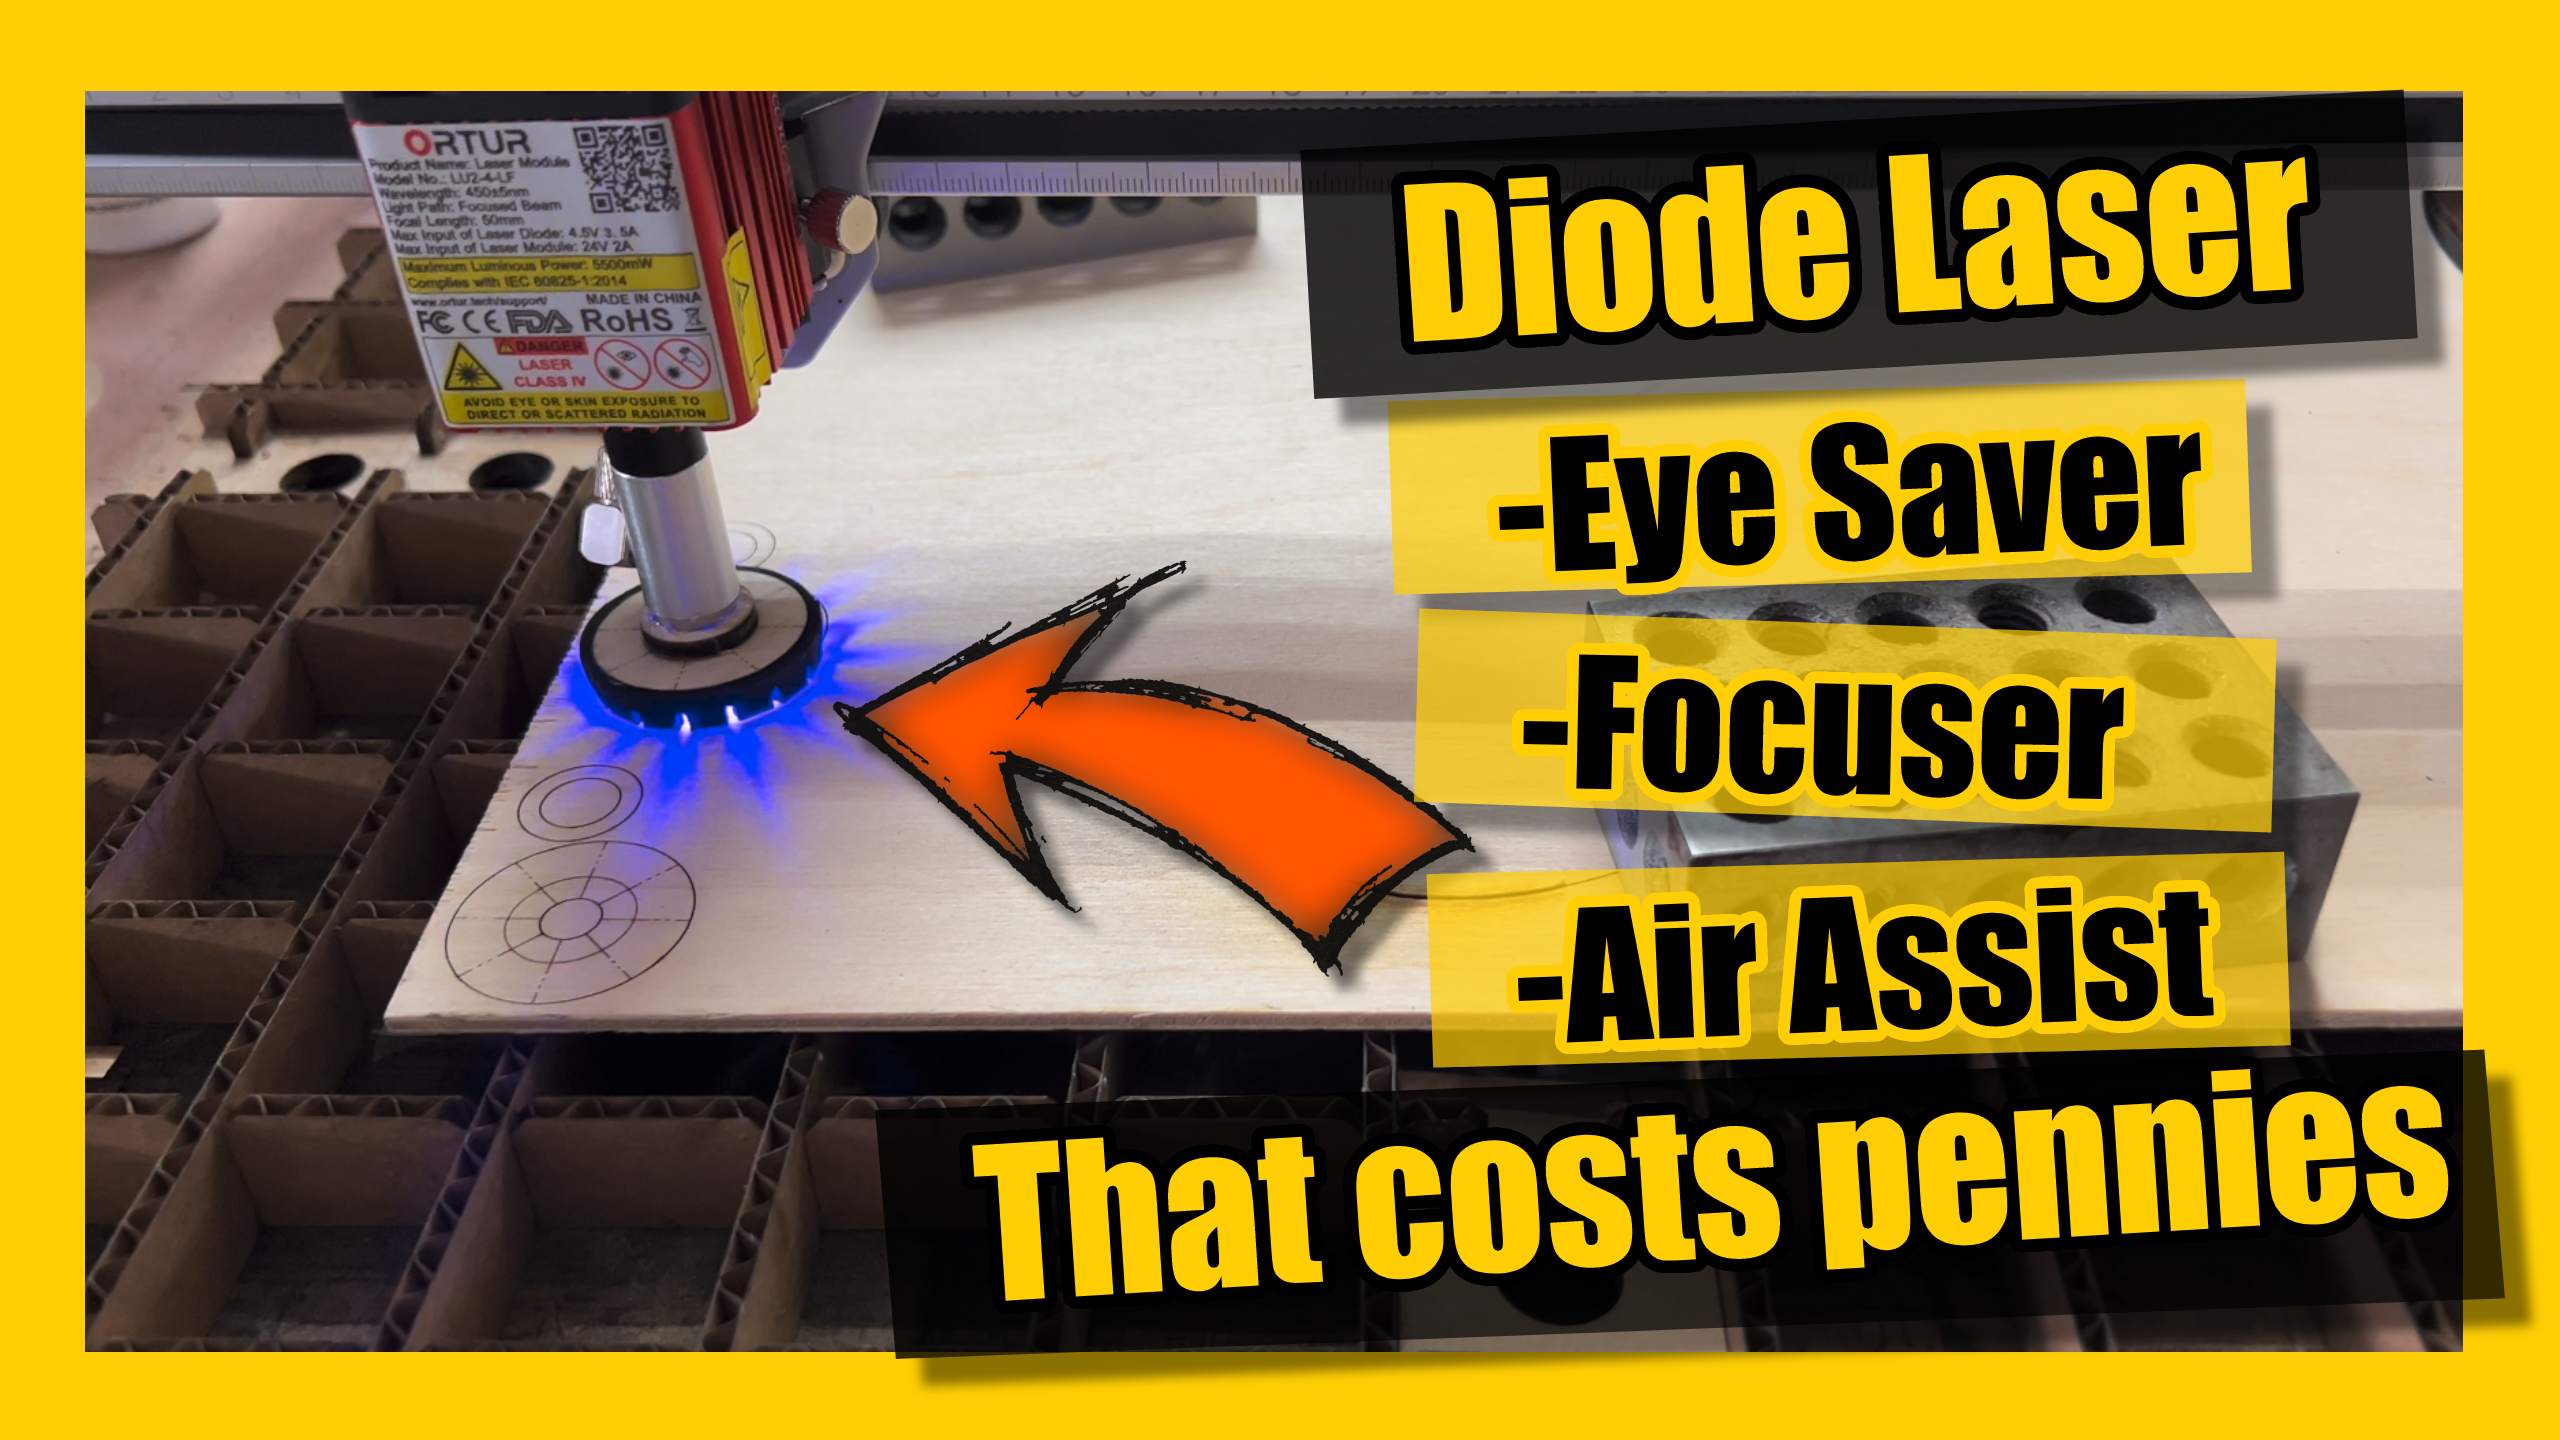 Diode laser cutter engraver. Eye saver, air assist, and focuser